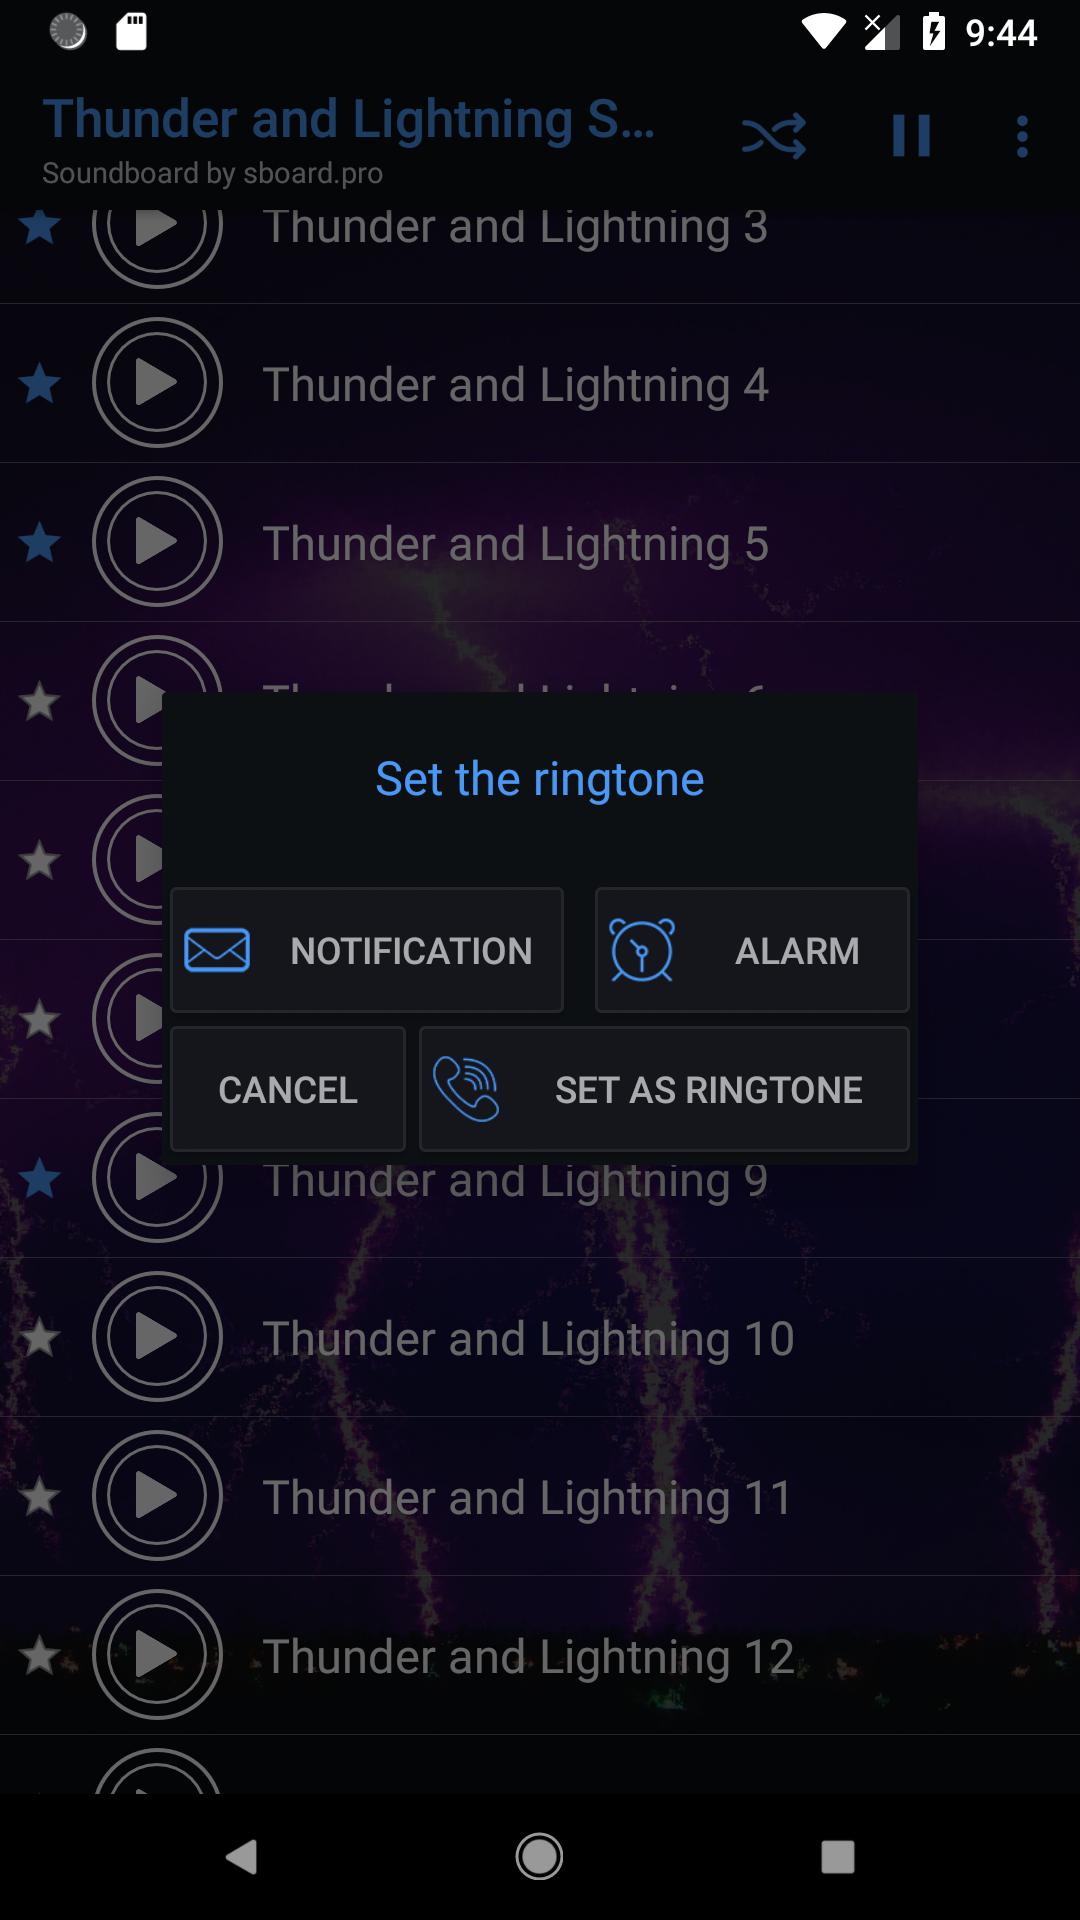 Thunder and Lightning Storm Sounds 1.1.3 Screenshot 4